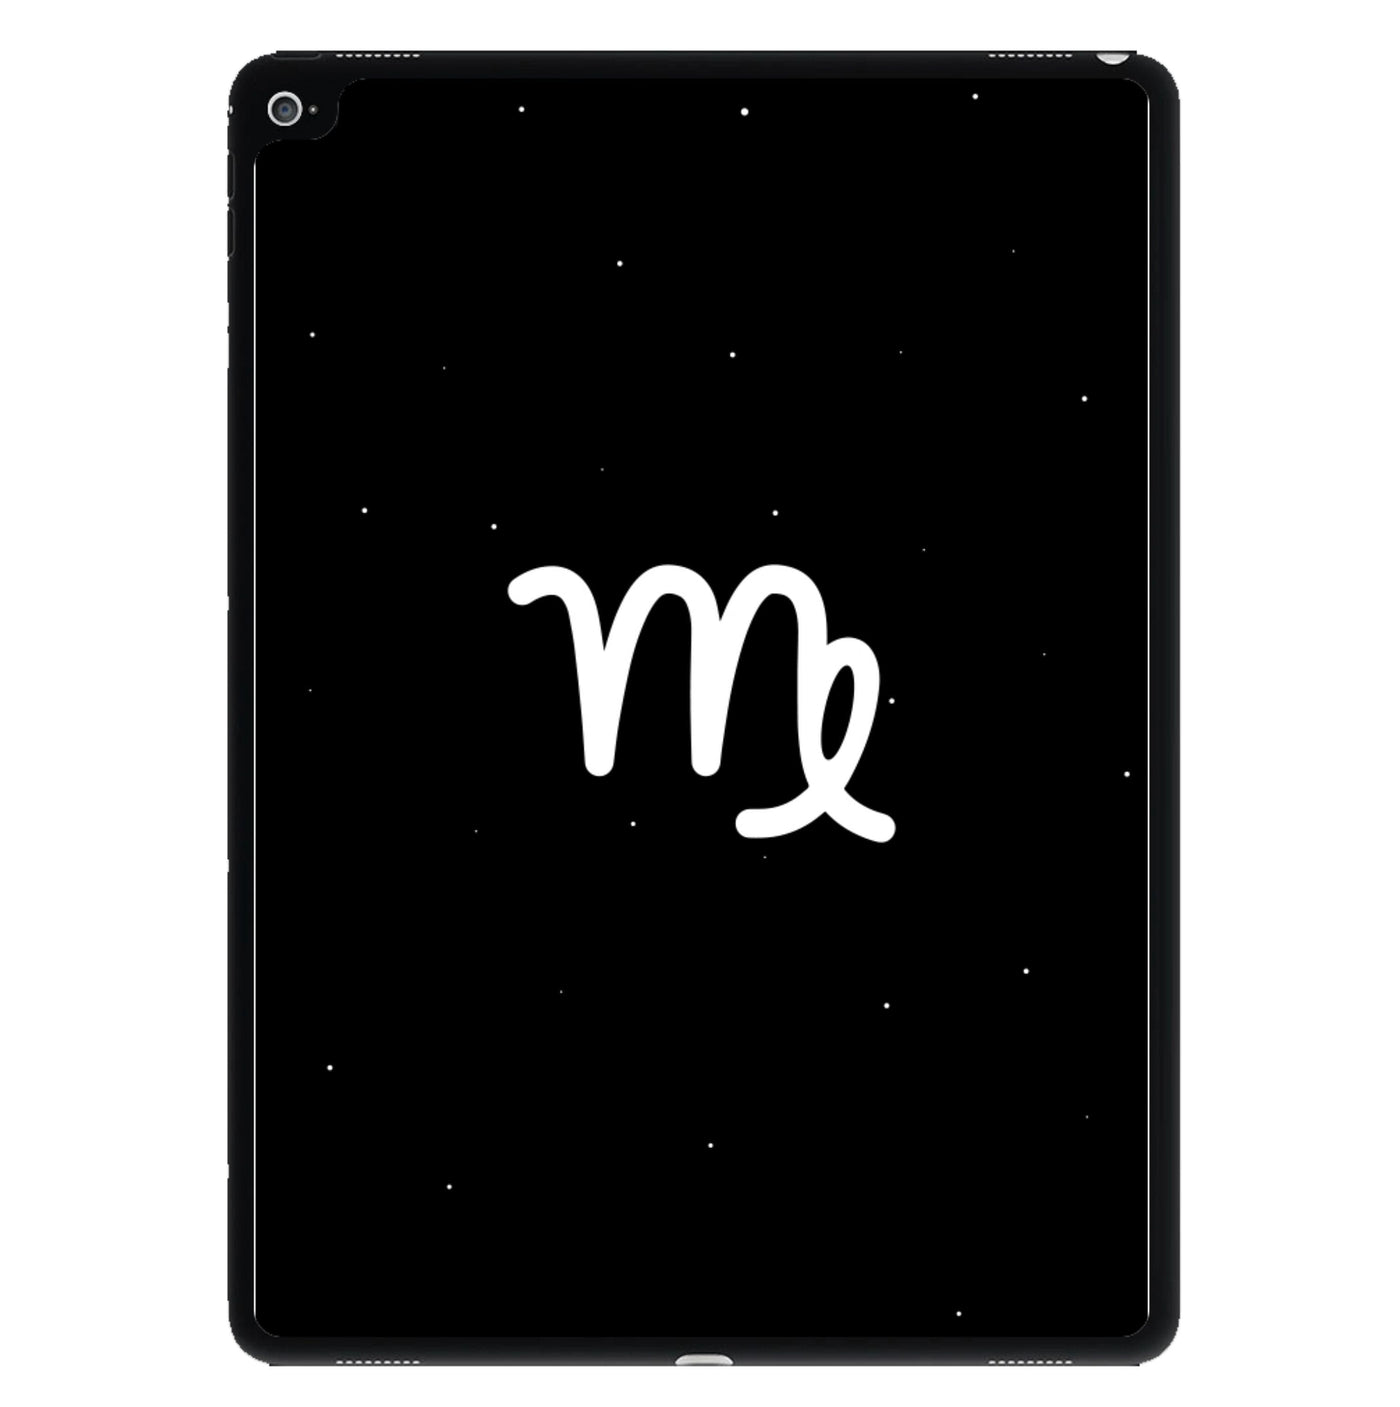 Virgo - Astrology iPad Case